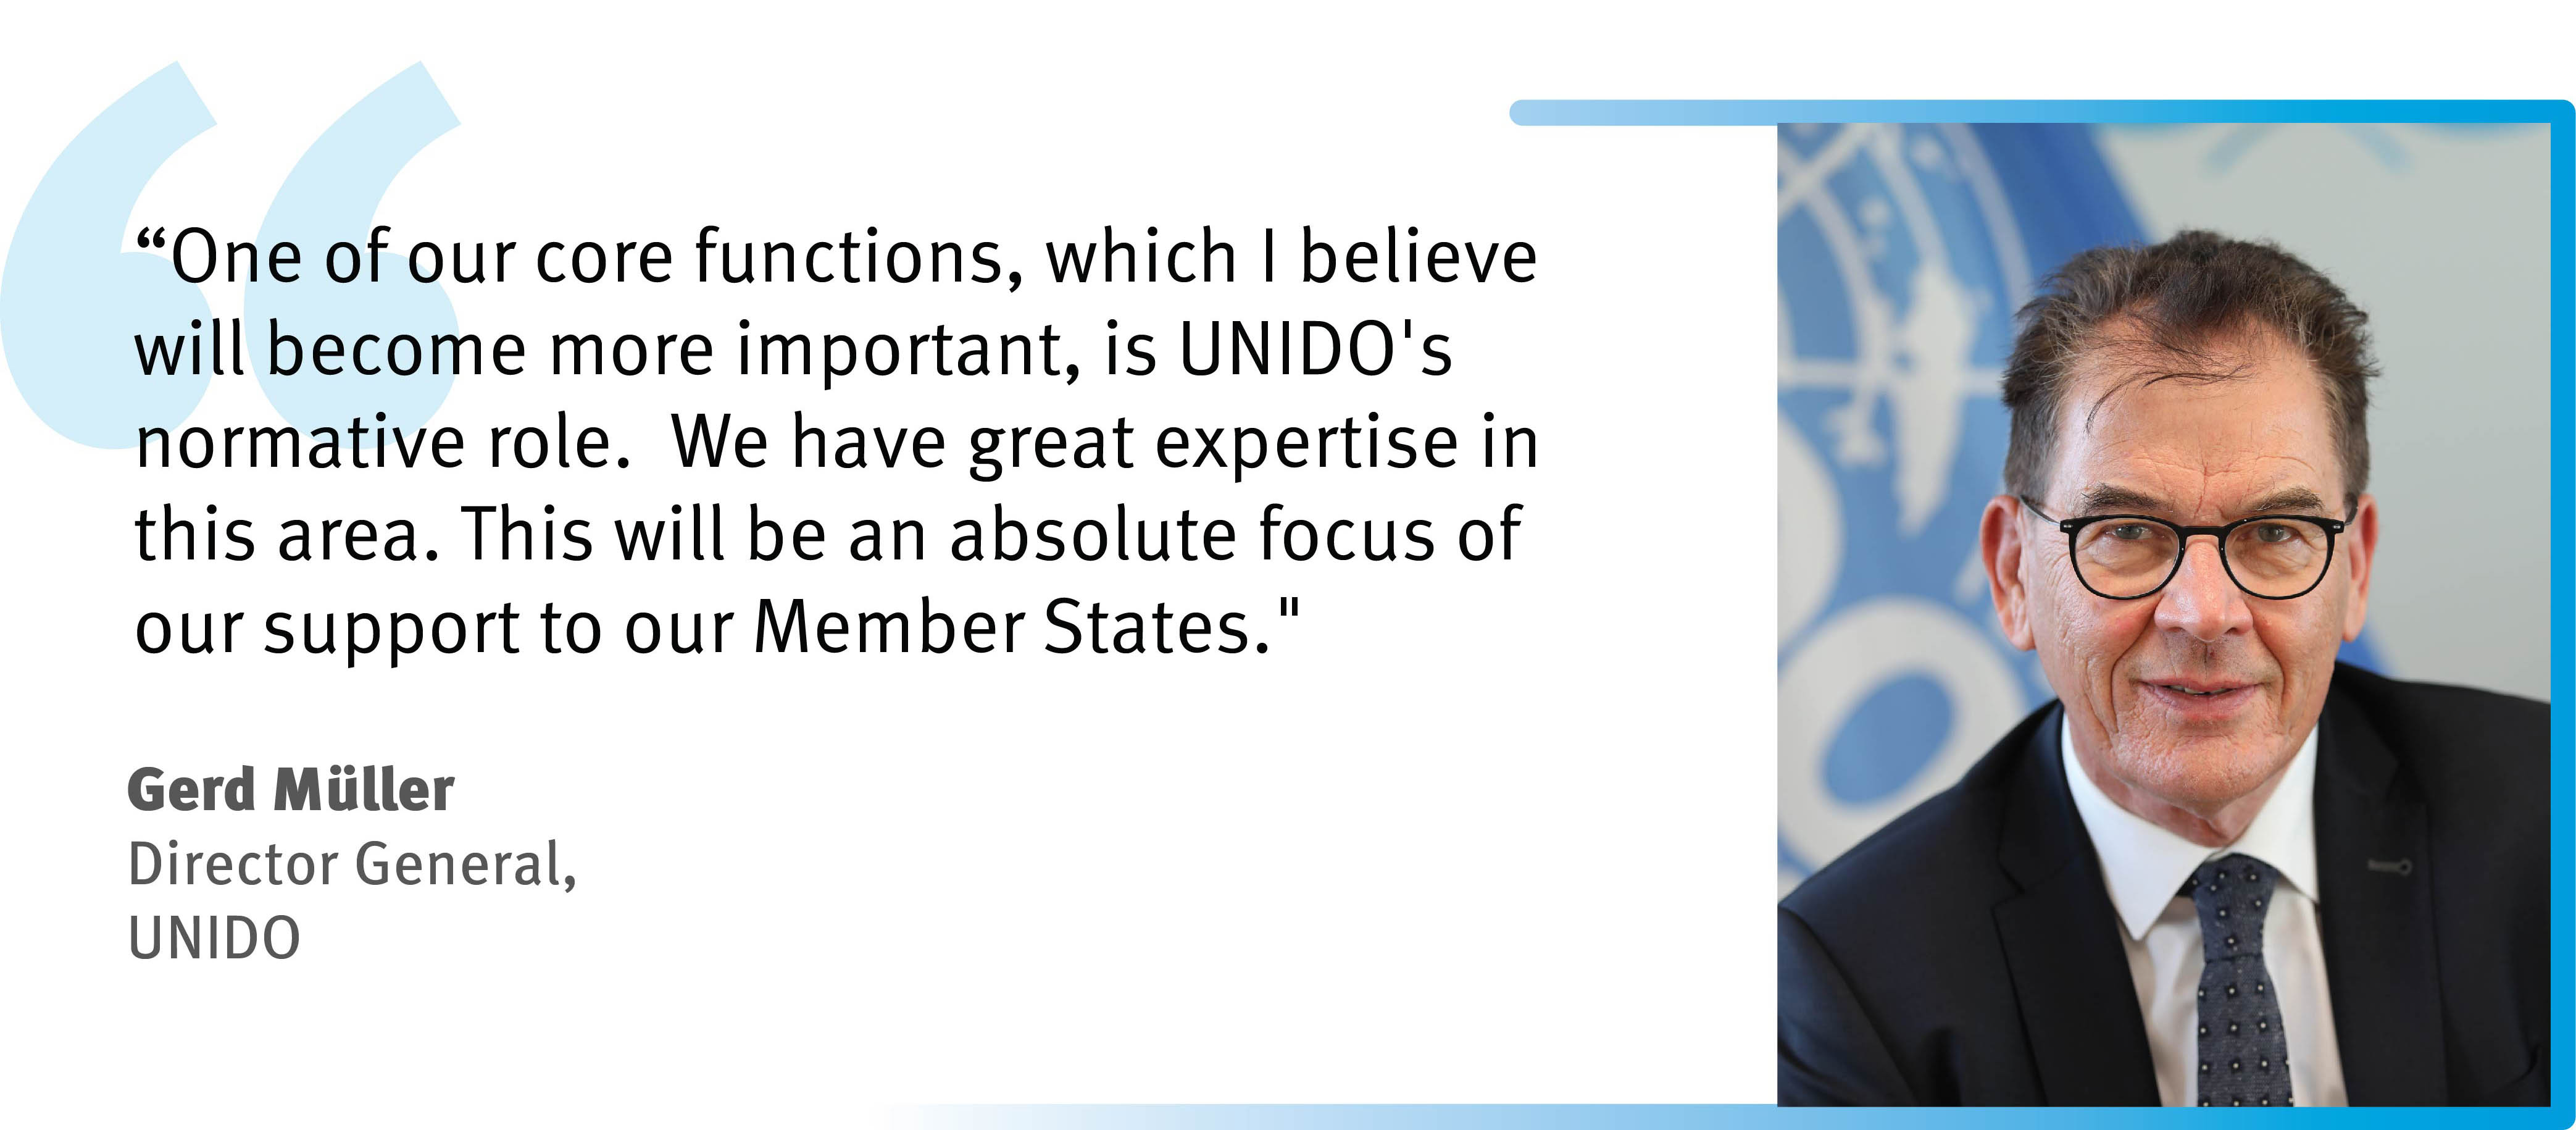 DG quote on UNIDO's normative role